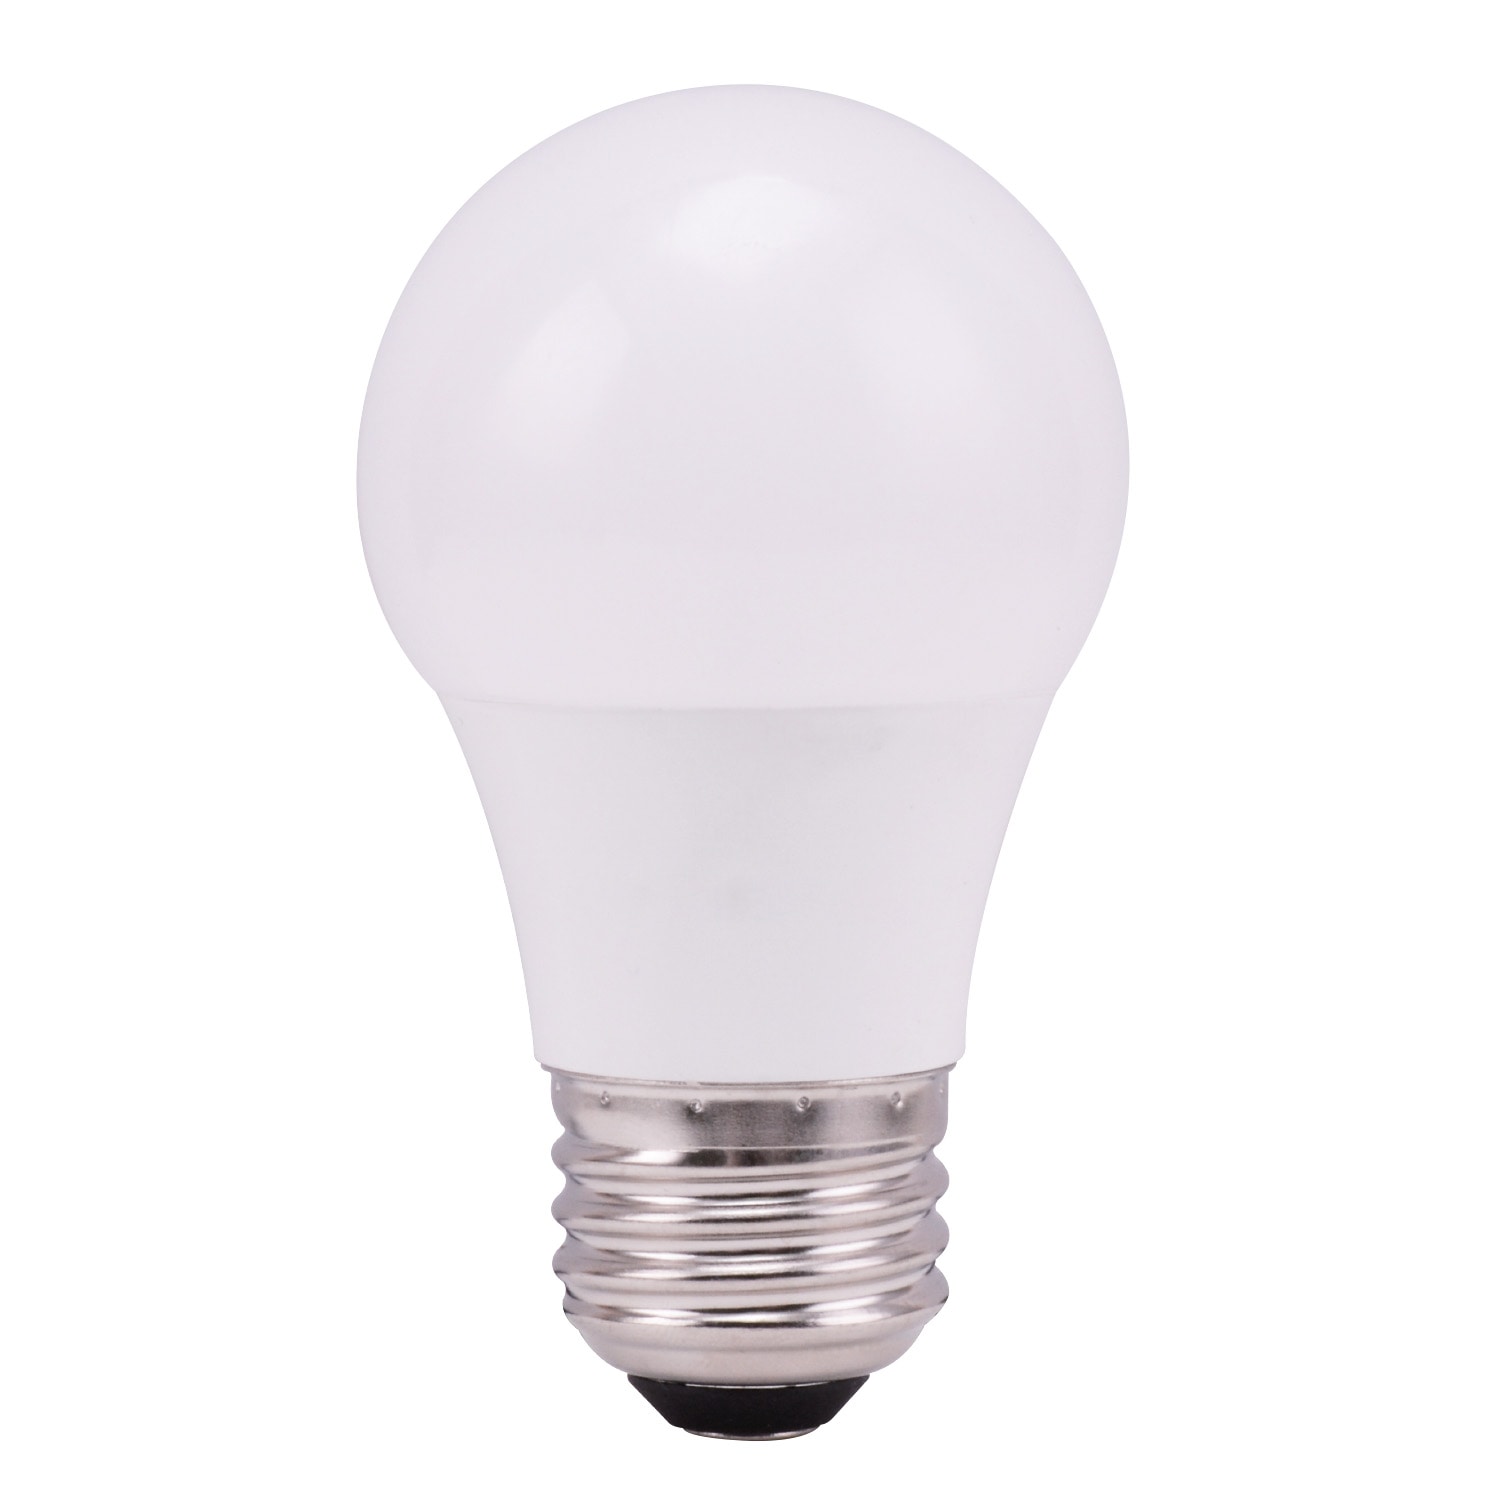 LED Refrigerator Light Bulb 60 Watt Equivalent, A15 Appliance Light Bulb for Range Hood Microwave Stove Hood, Waterproof 600Lumen 7W 120V Daylight